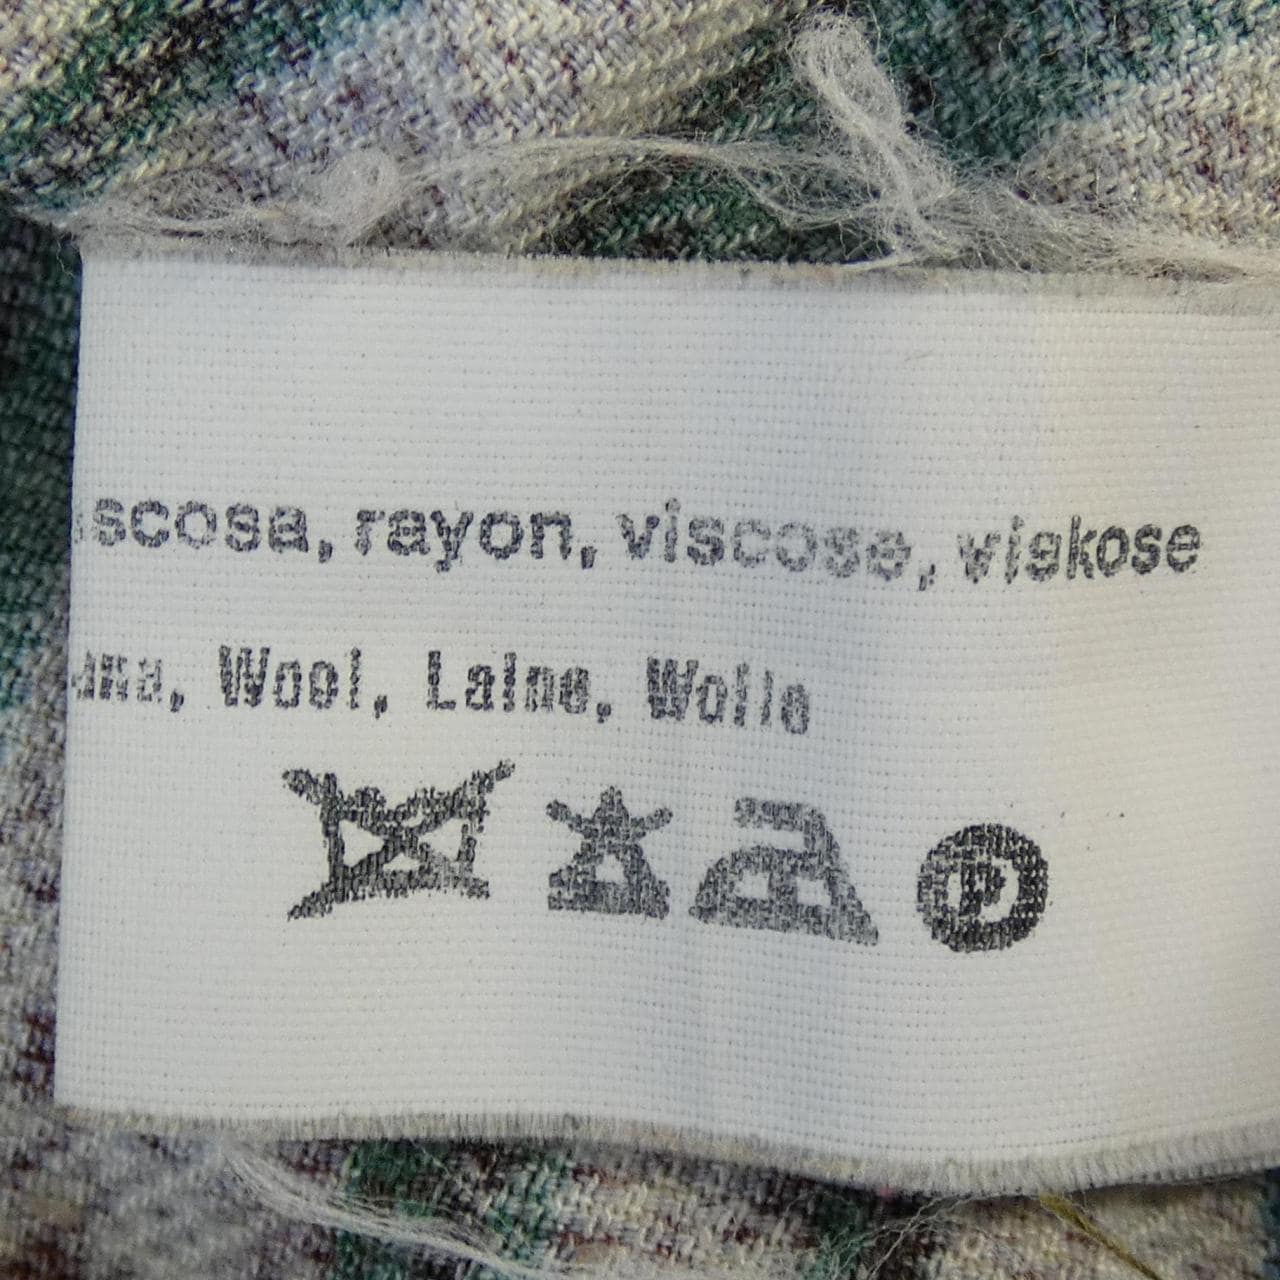 [vintage] MISSONI SPORT shirt